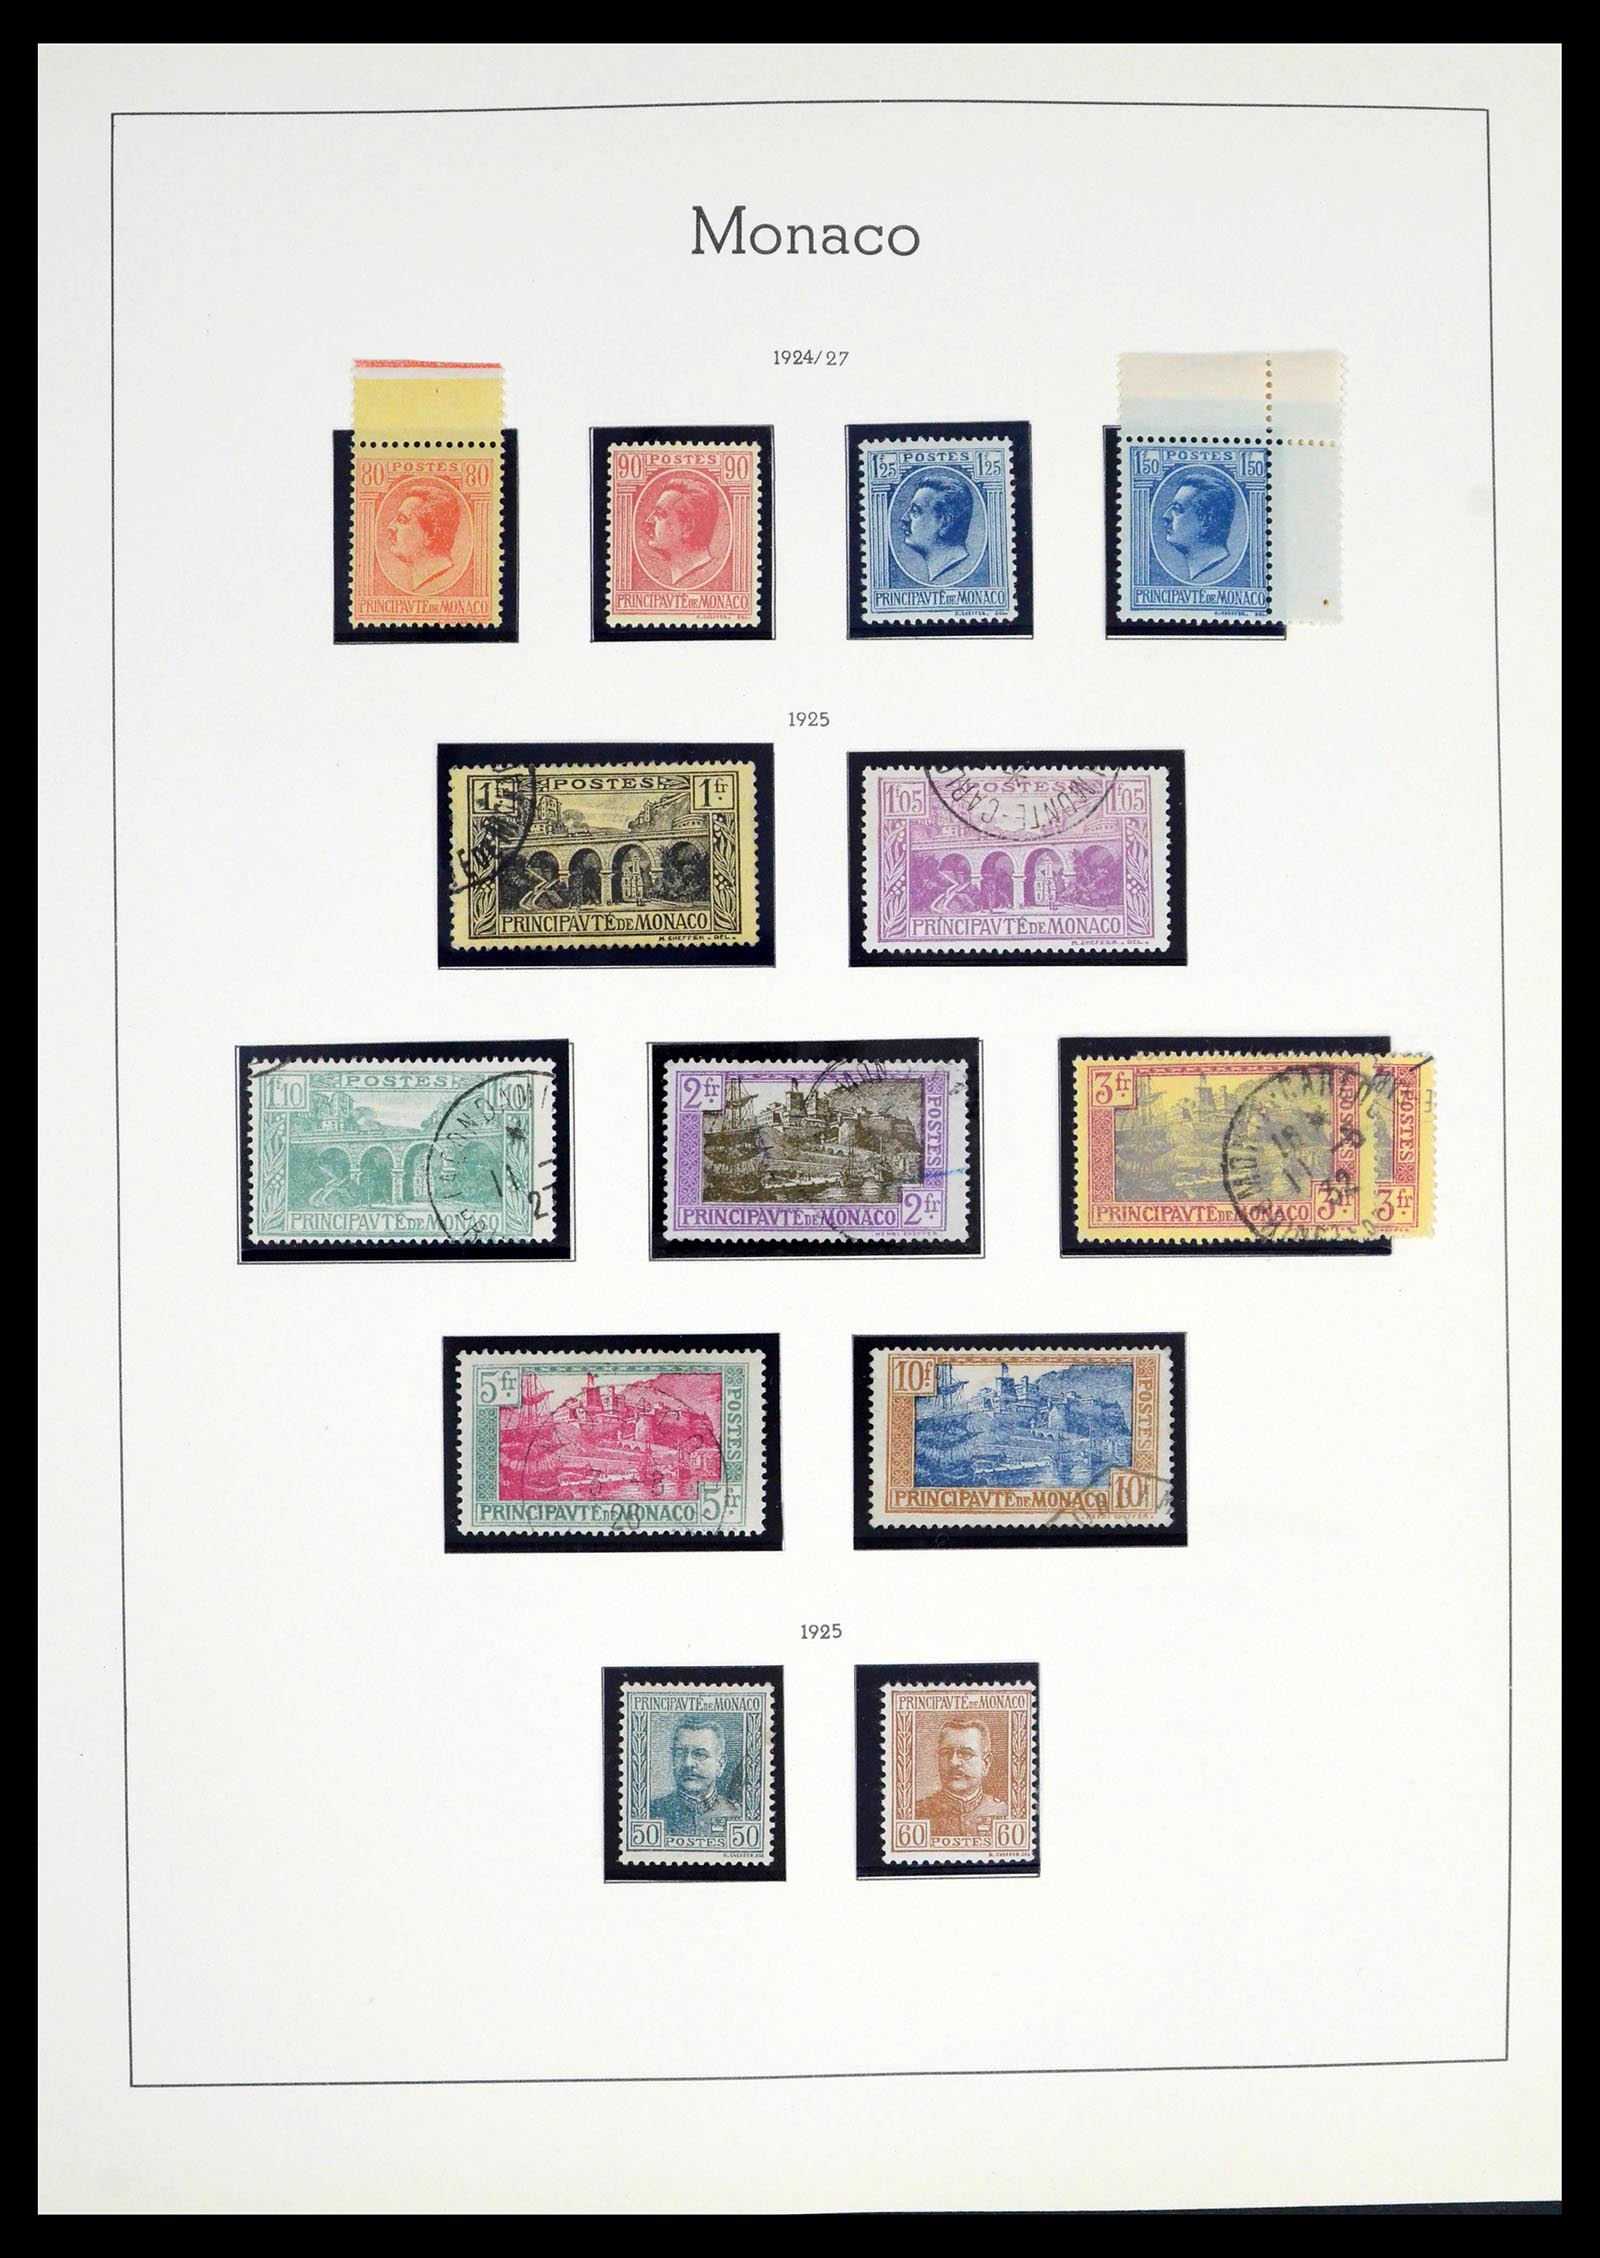 39392 0007 - Stamp collection 39392 Monaco 1885-1999.